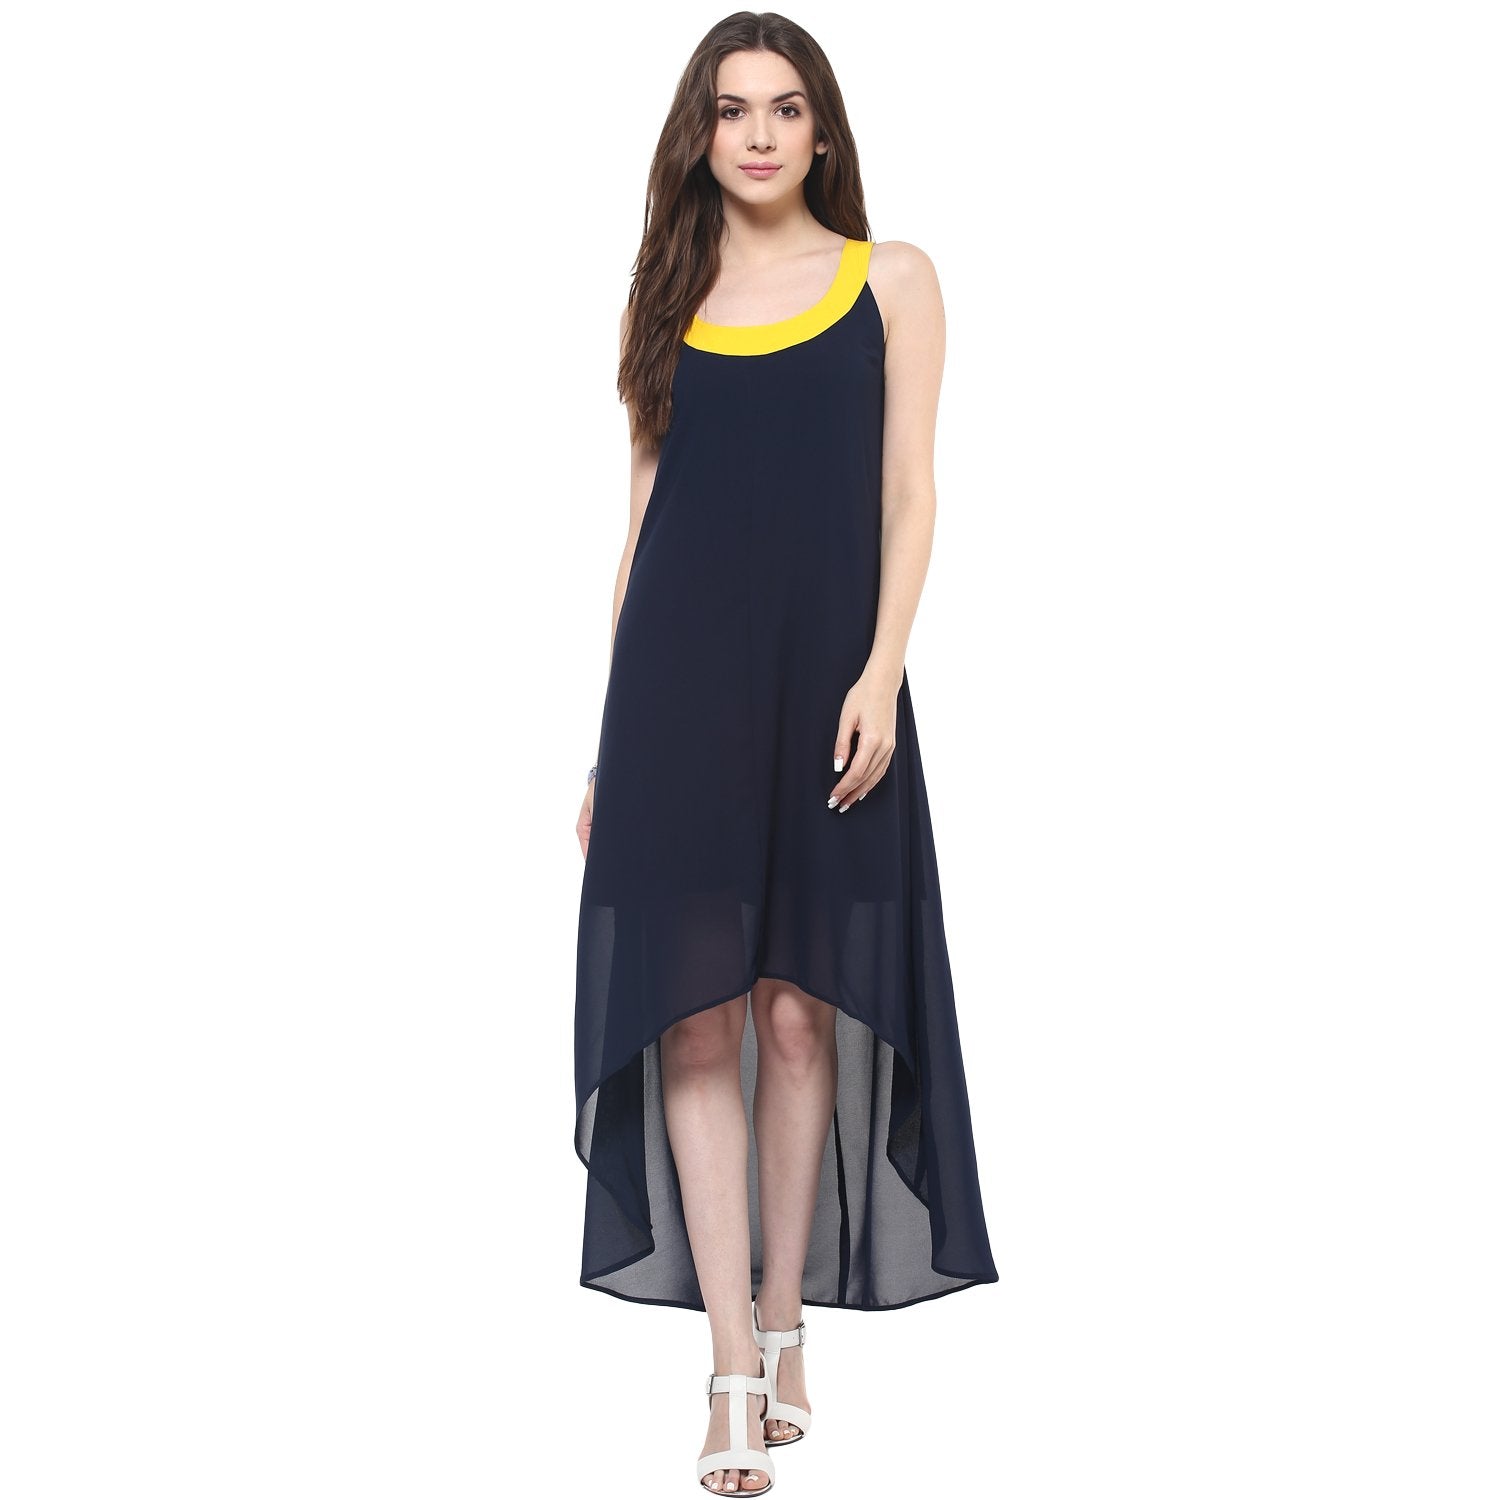 Women's Neon Loose Fit Dress - Pannkh